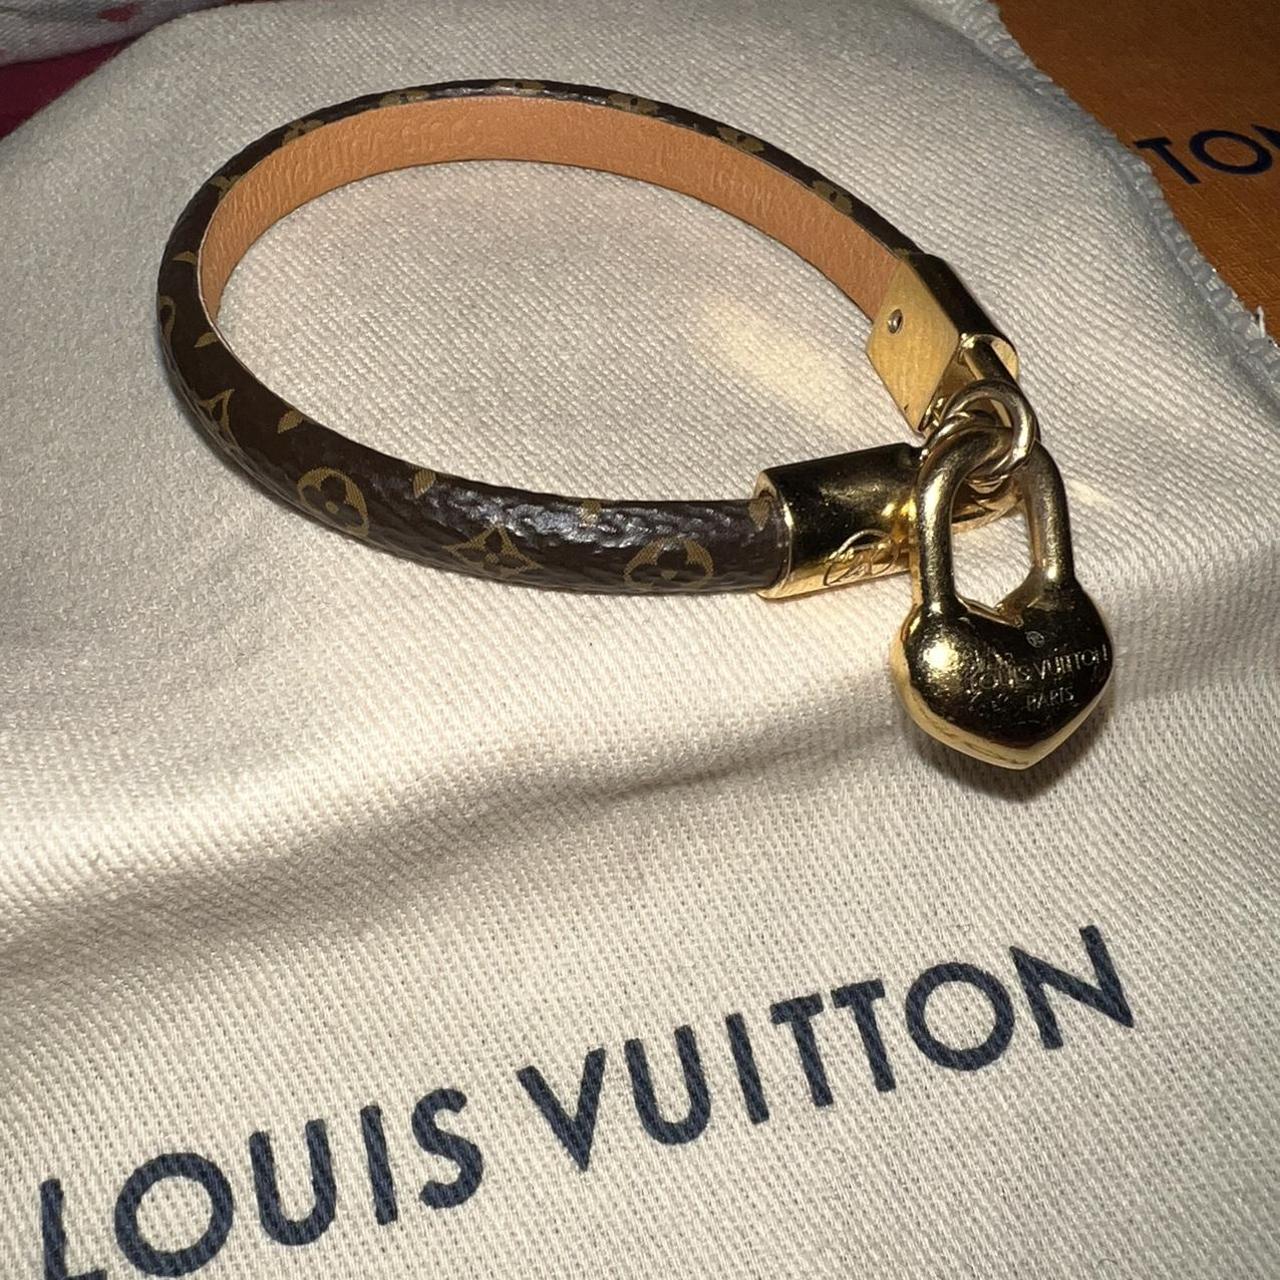 Shop Louis Vuitton MONOGRAM Crazy in lock bracelet (M6451F) by sunnyfunny